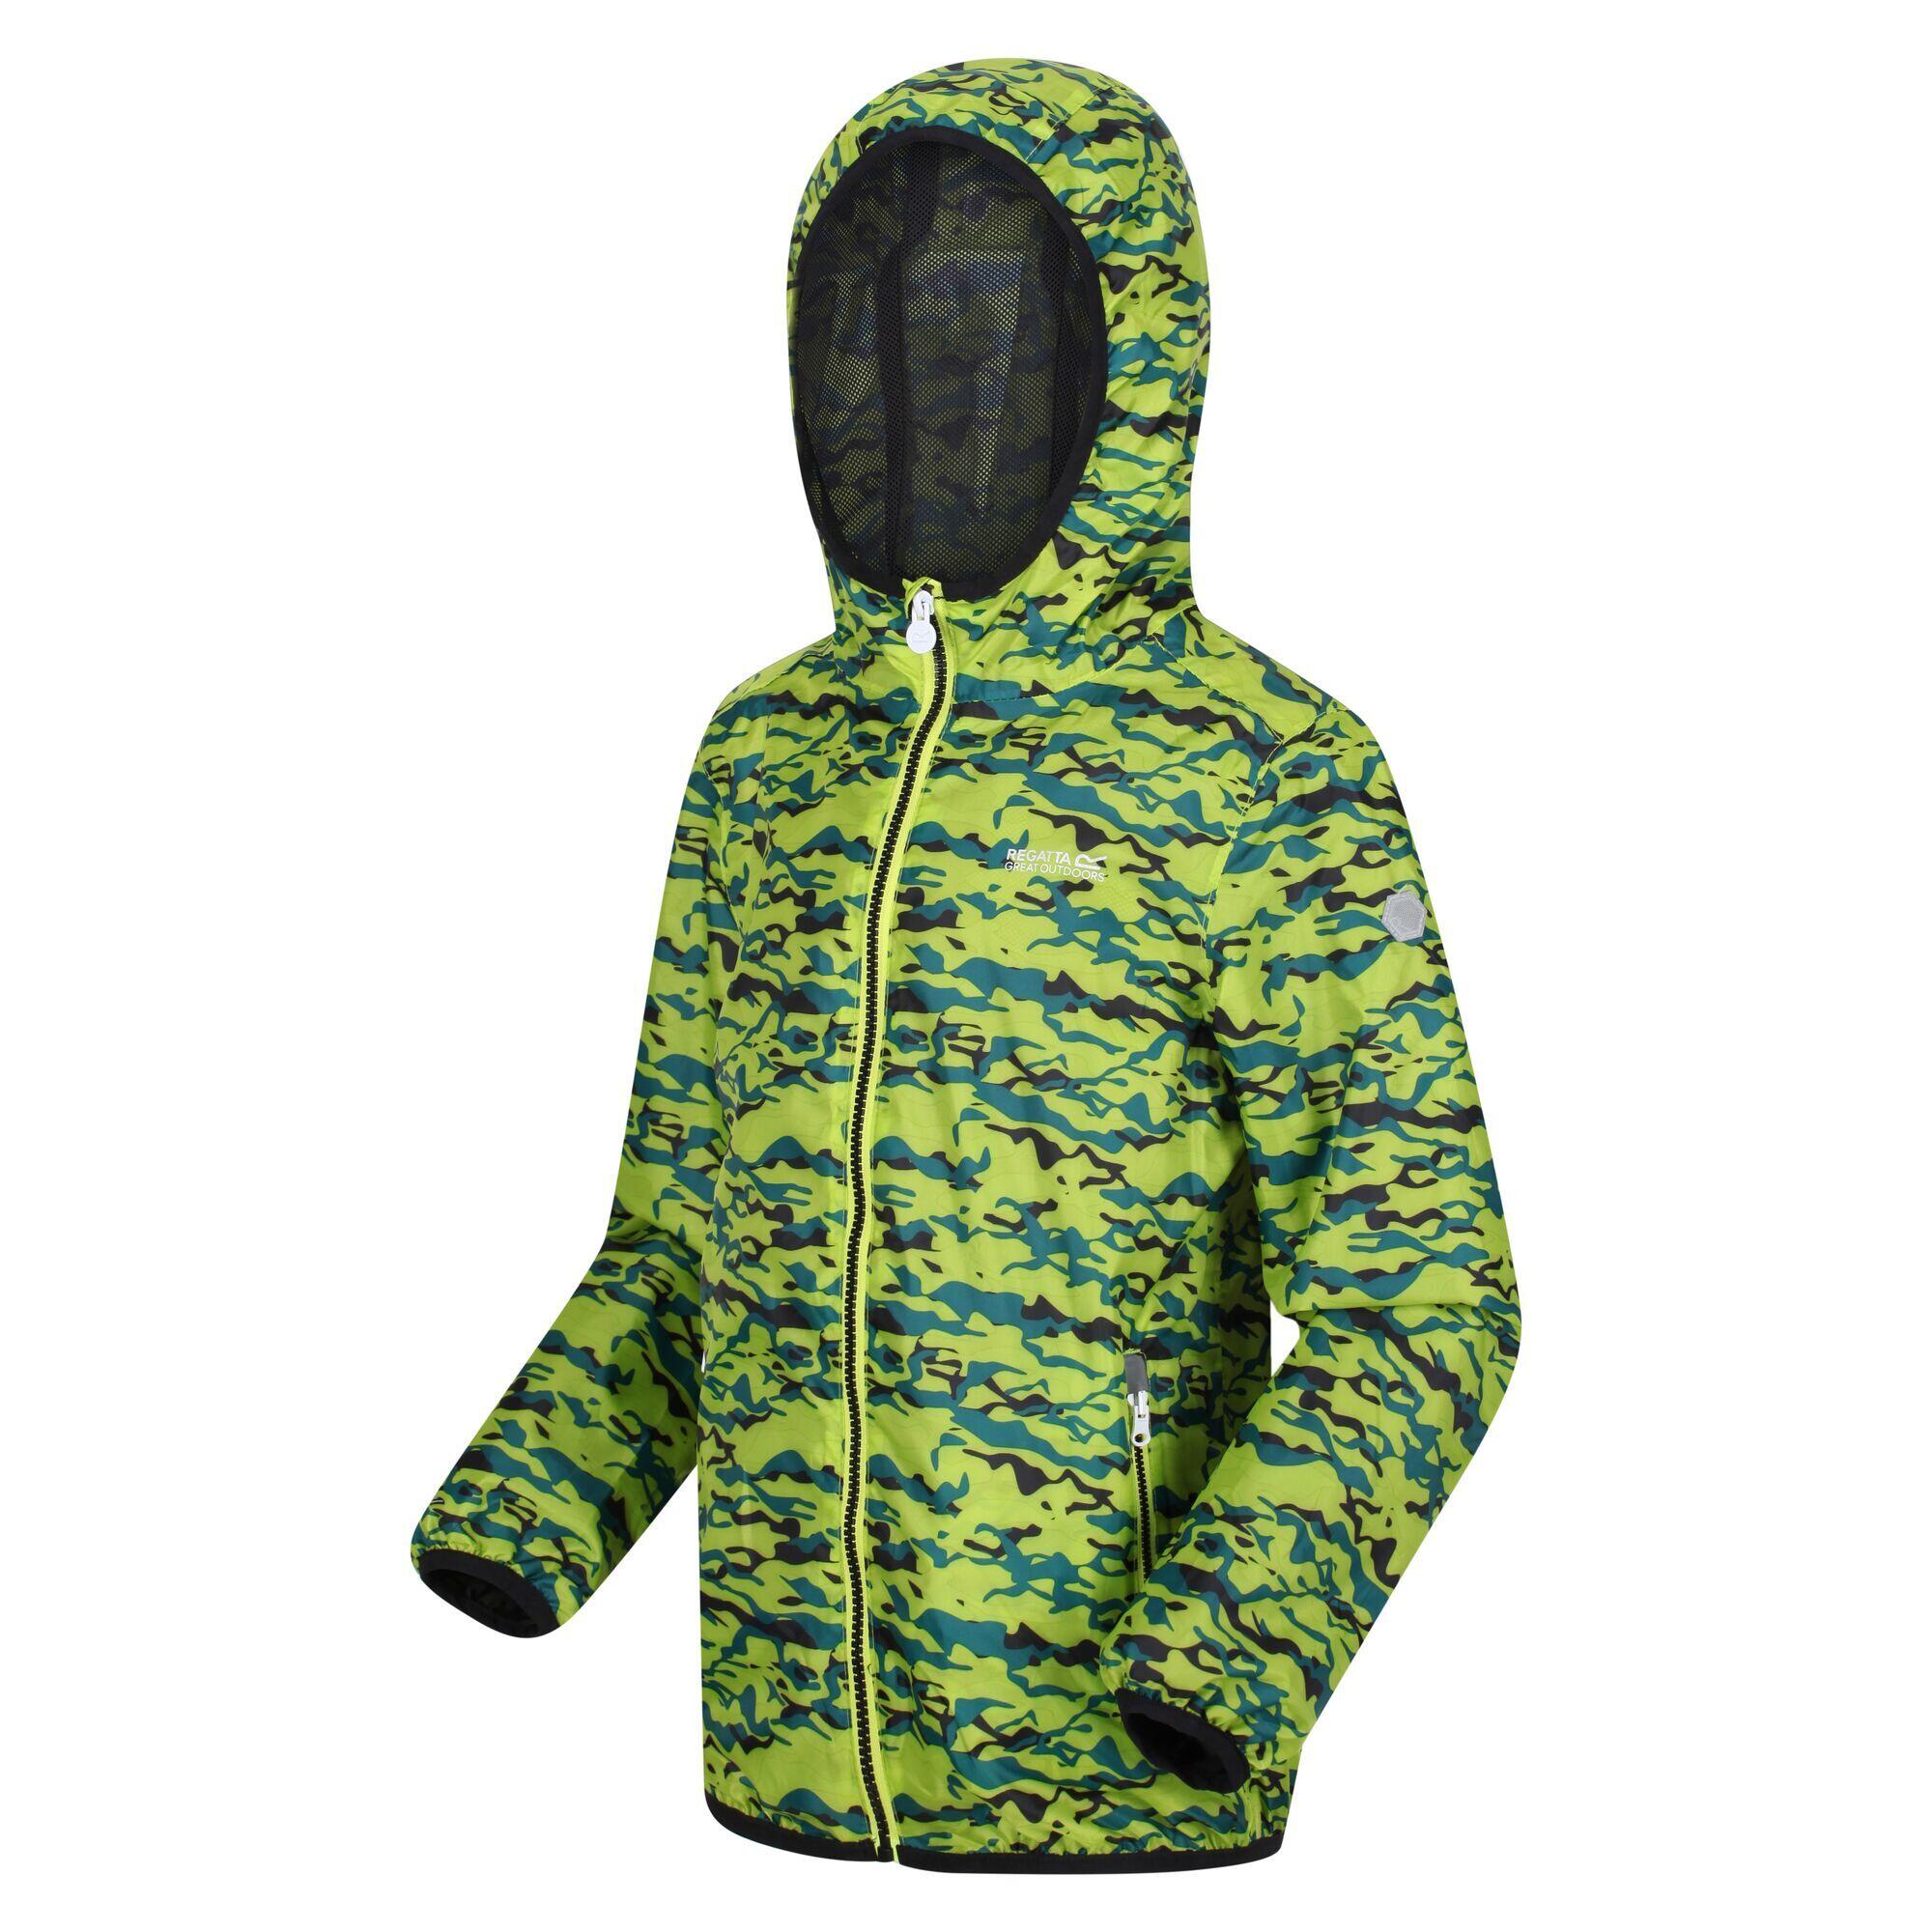 Childrens/Kids Lever Camo Packaway Waterproof Jacket (Bright Kiwi) 4/5